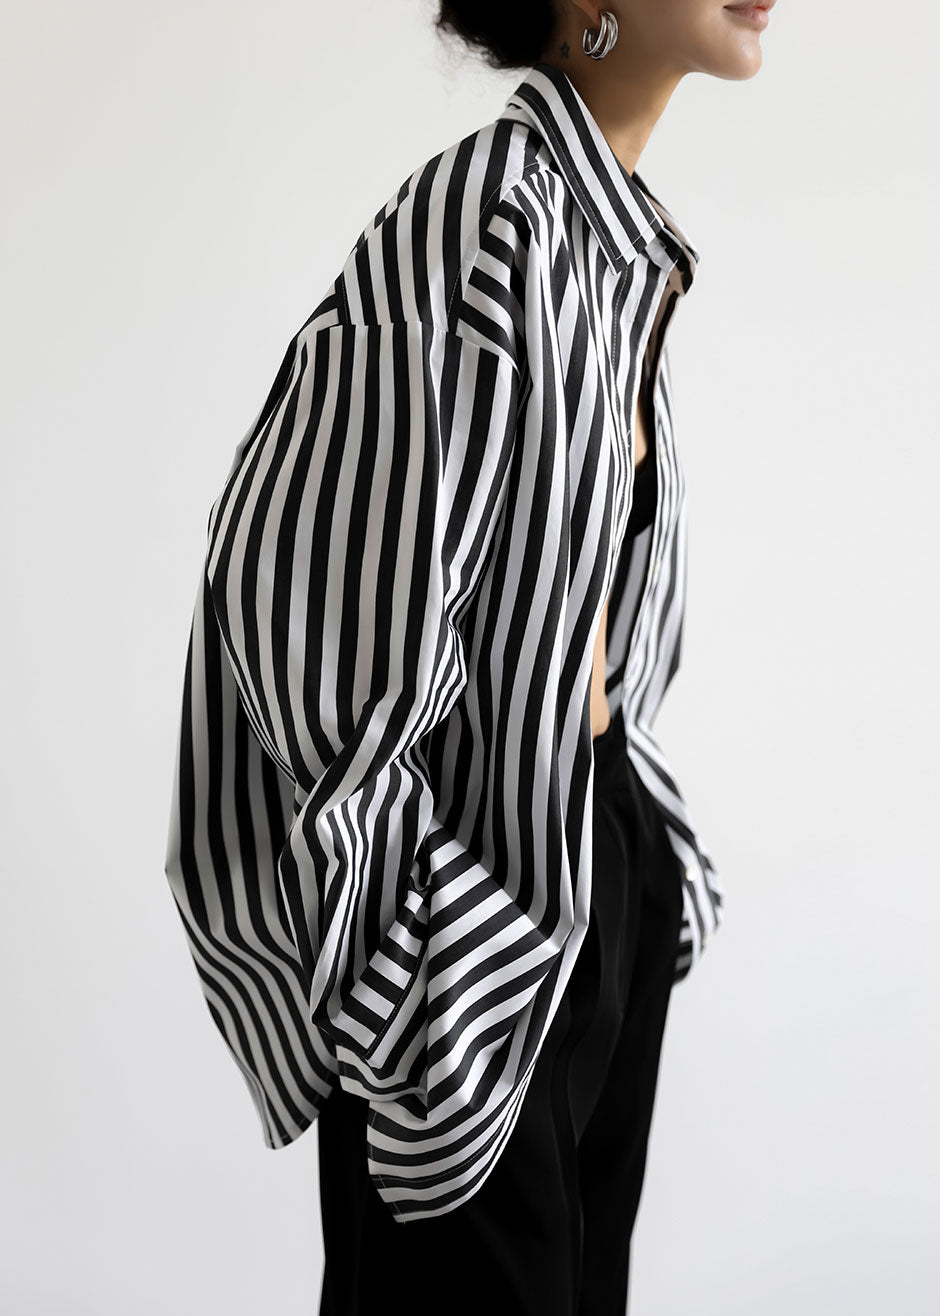  Black White Striped Shirt